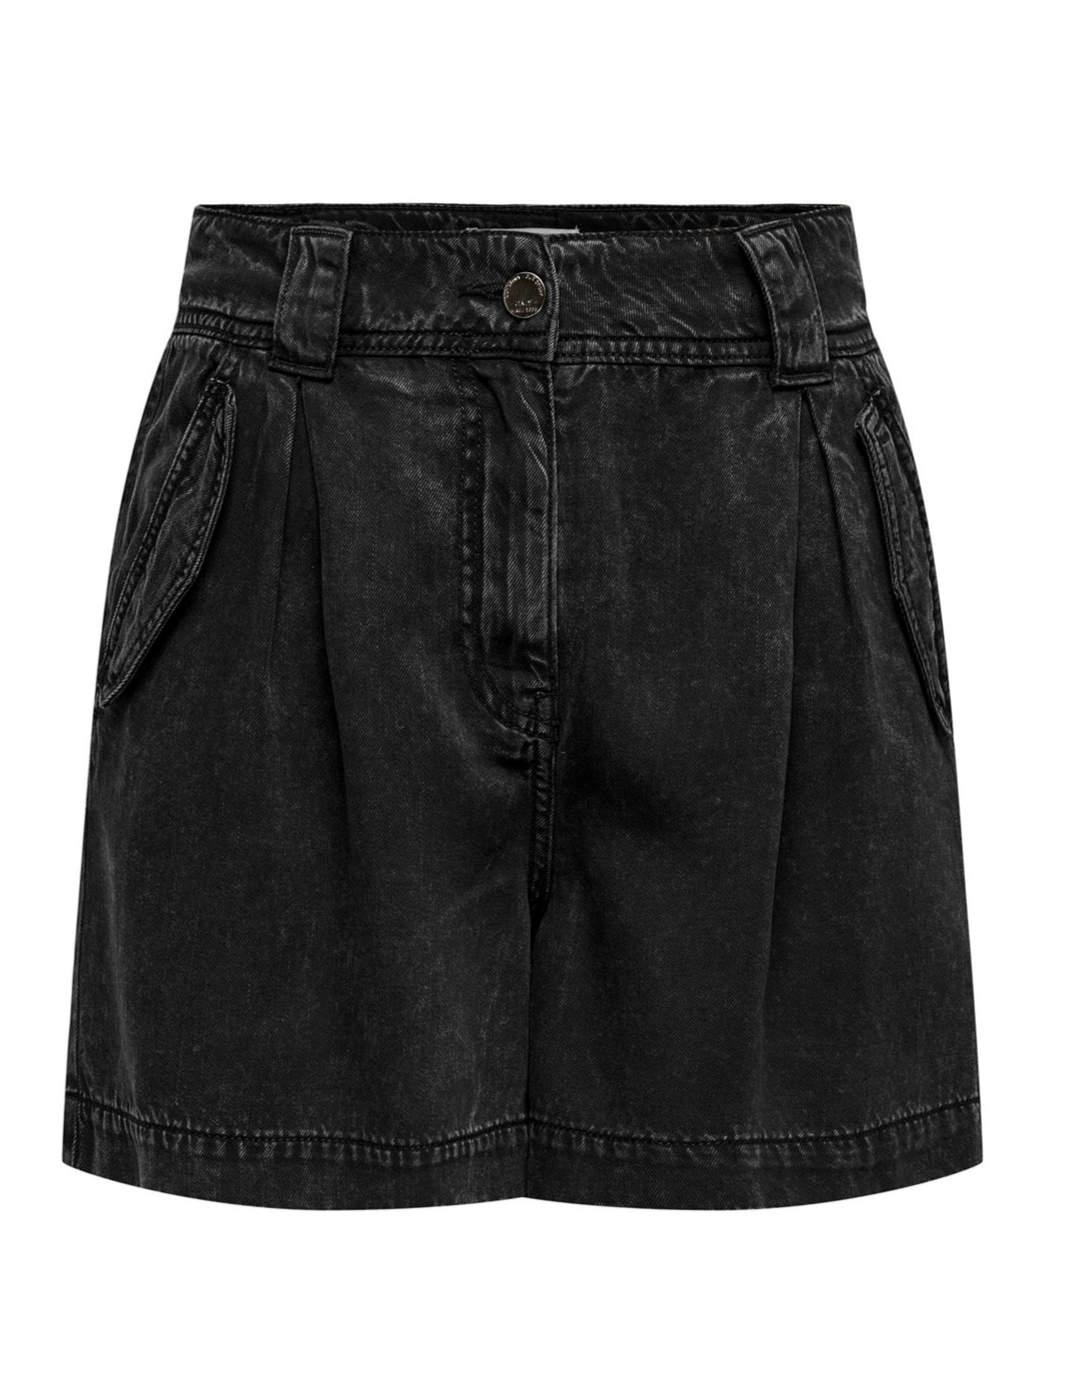 Shorts Only Kenya negro desgastado regular para mujer